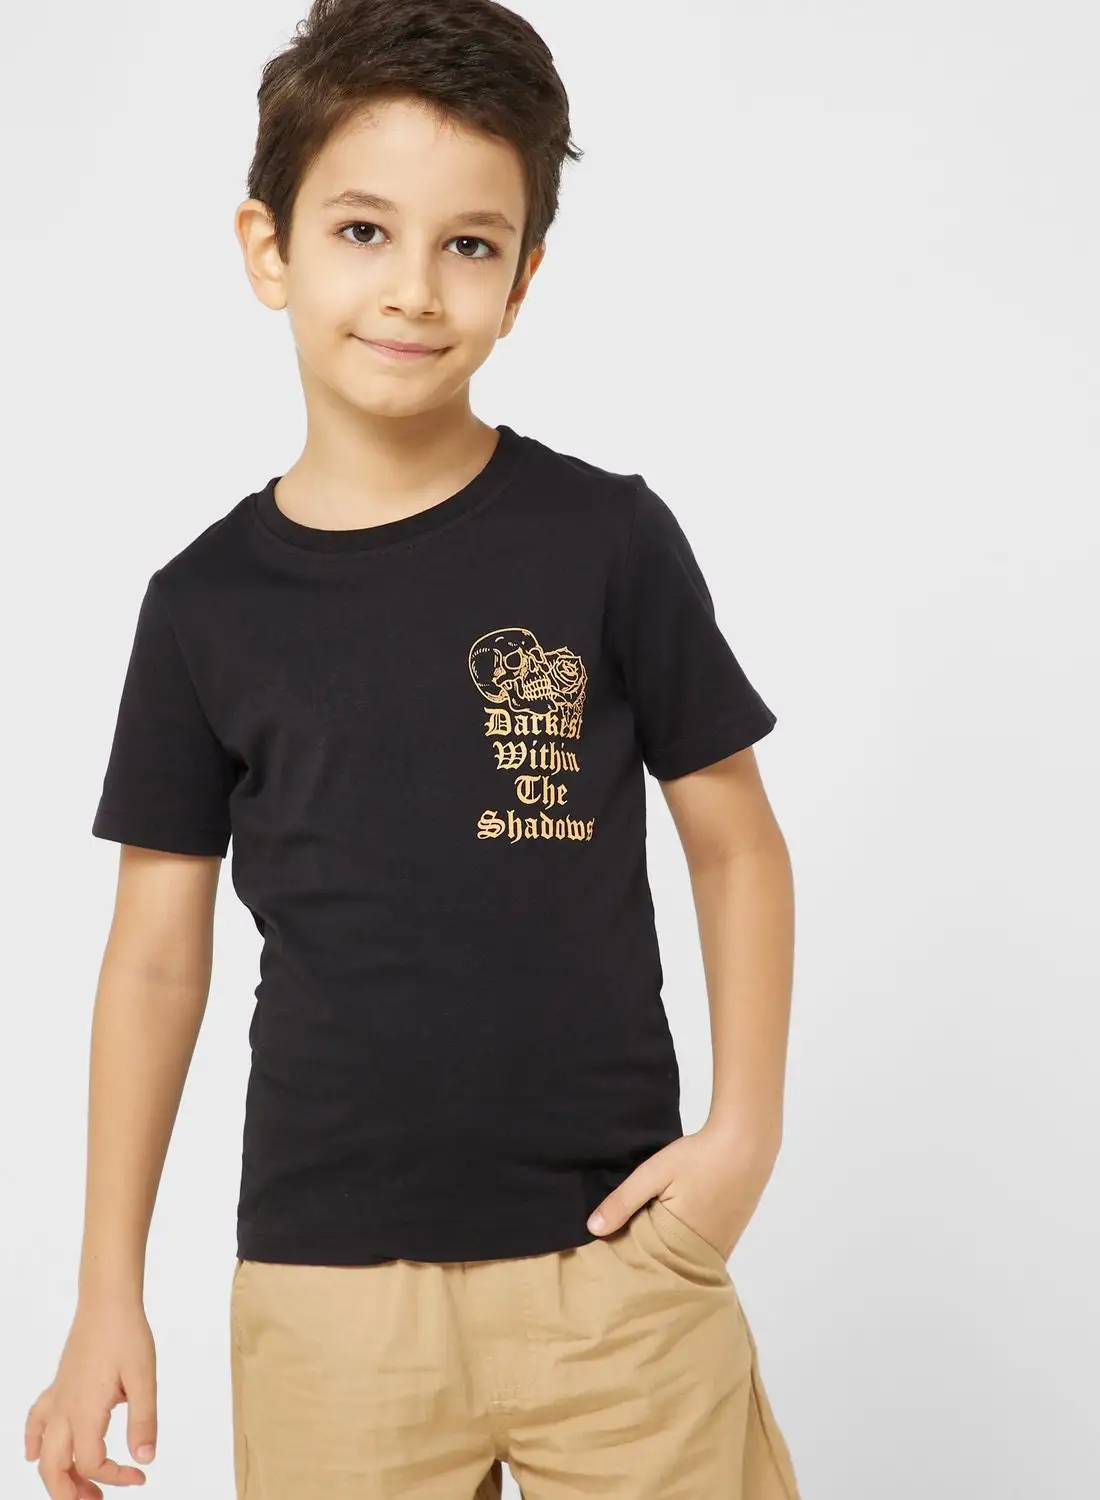 Pinata Front And Back Printed T-Shirt For Boys